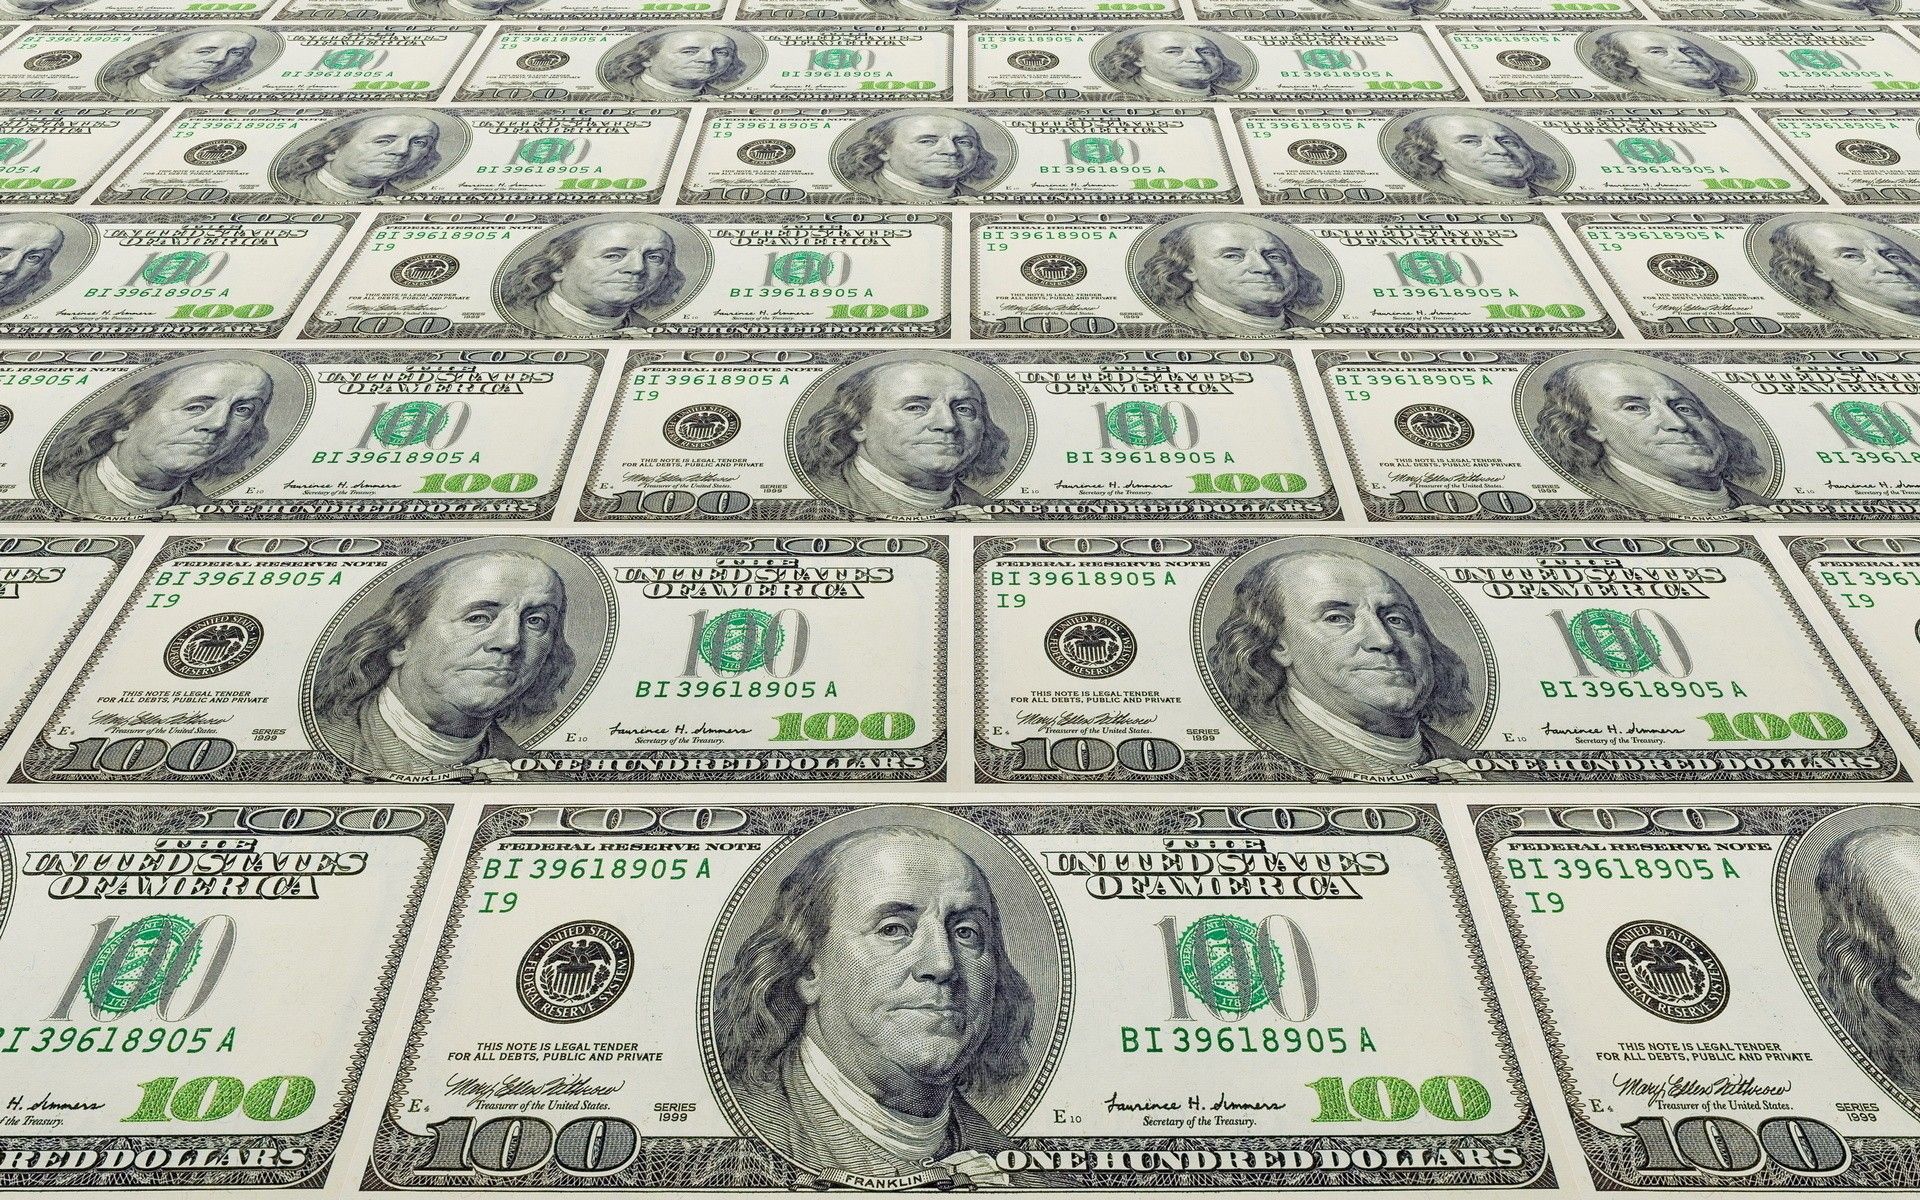 Android Images Of Money By Piedad Bosdet - 100 Dollar Bill - HD Wallpaper 